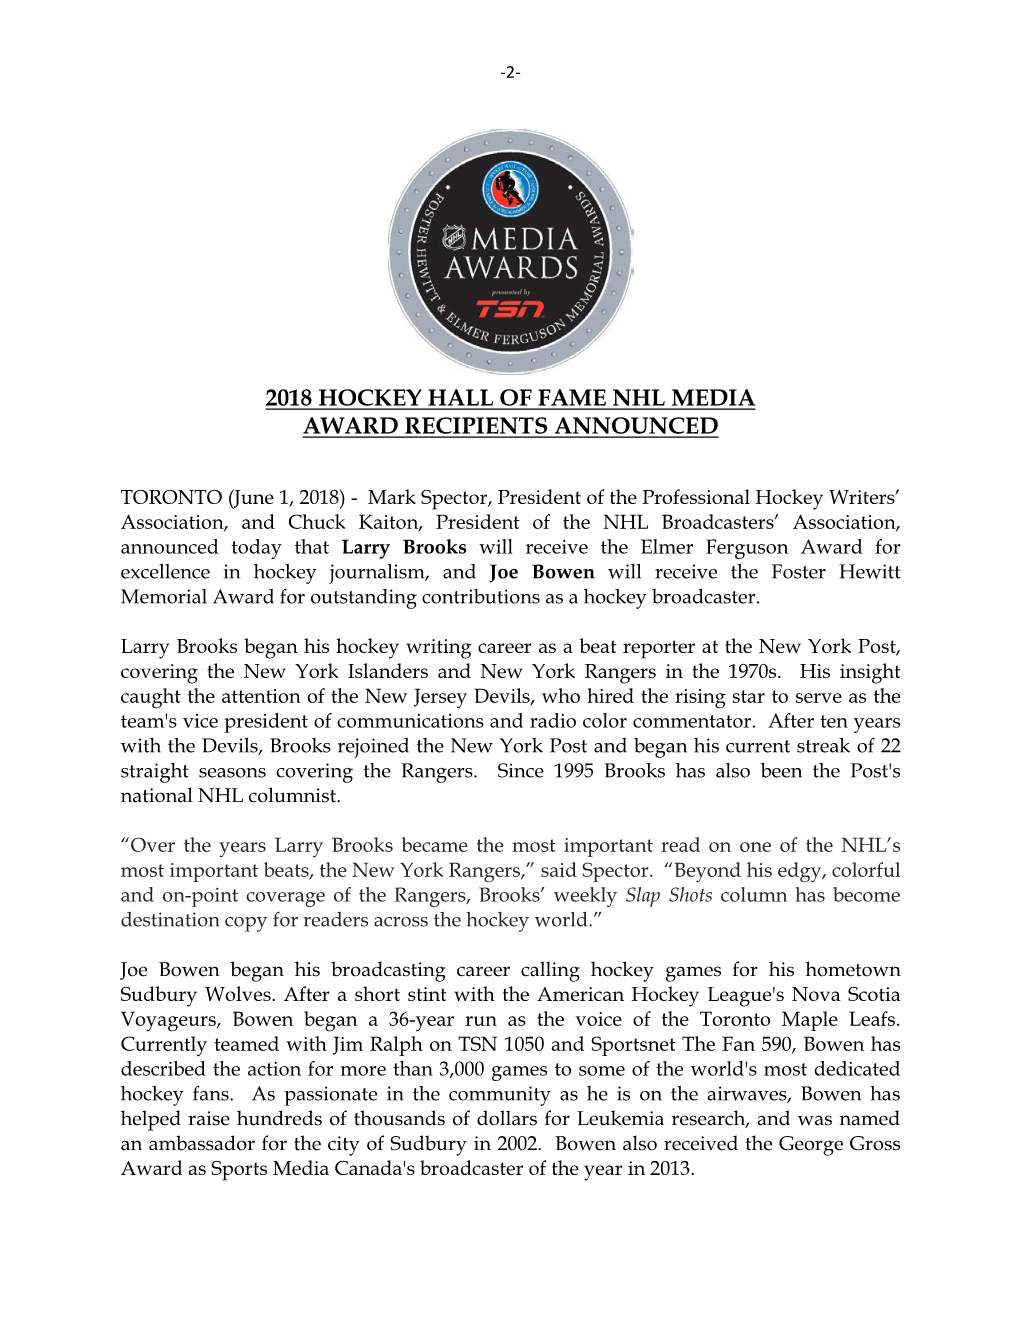 2018 Hockey Hall of Fame Nhl Media Award Recipients Announced